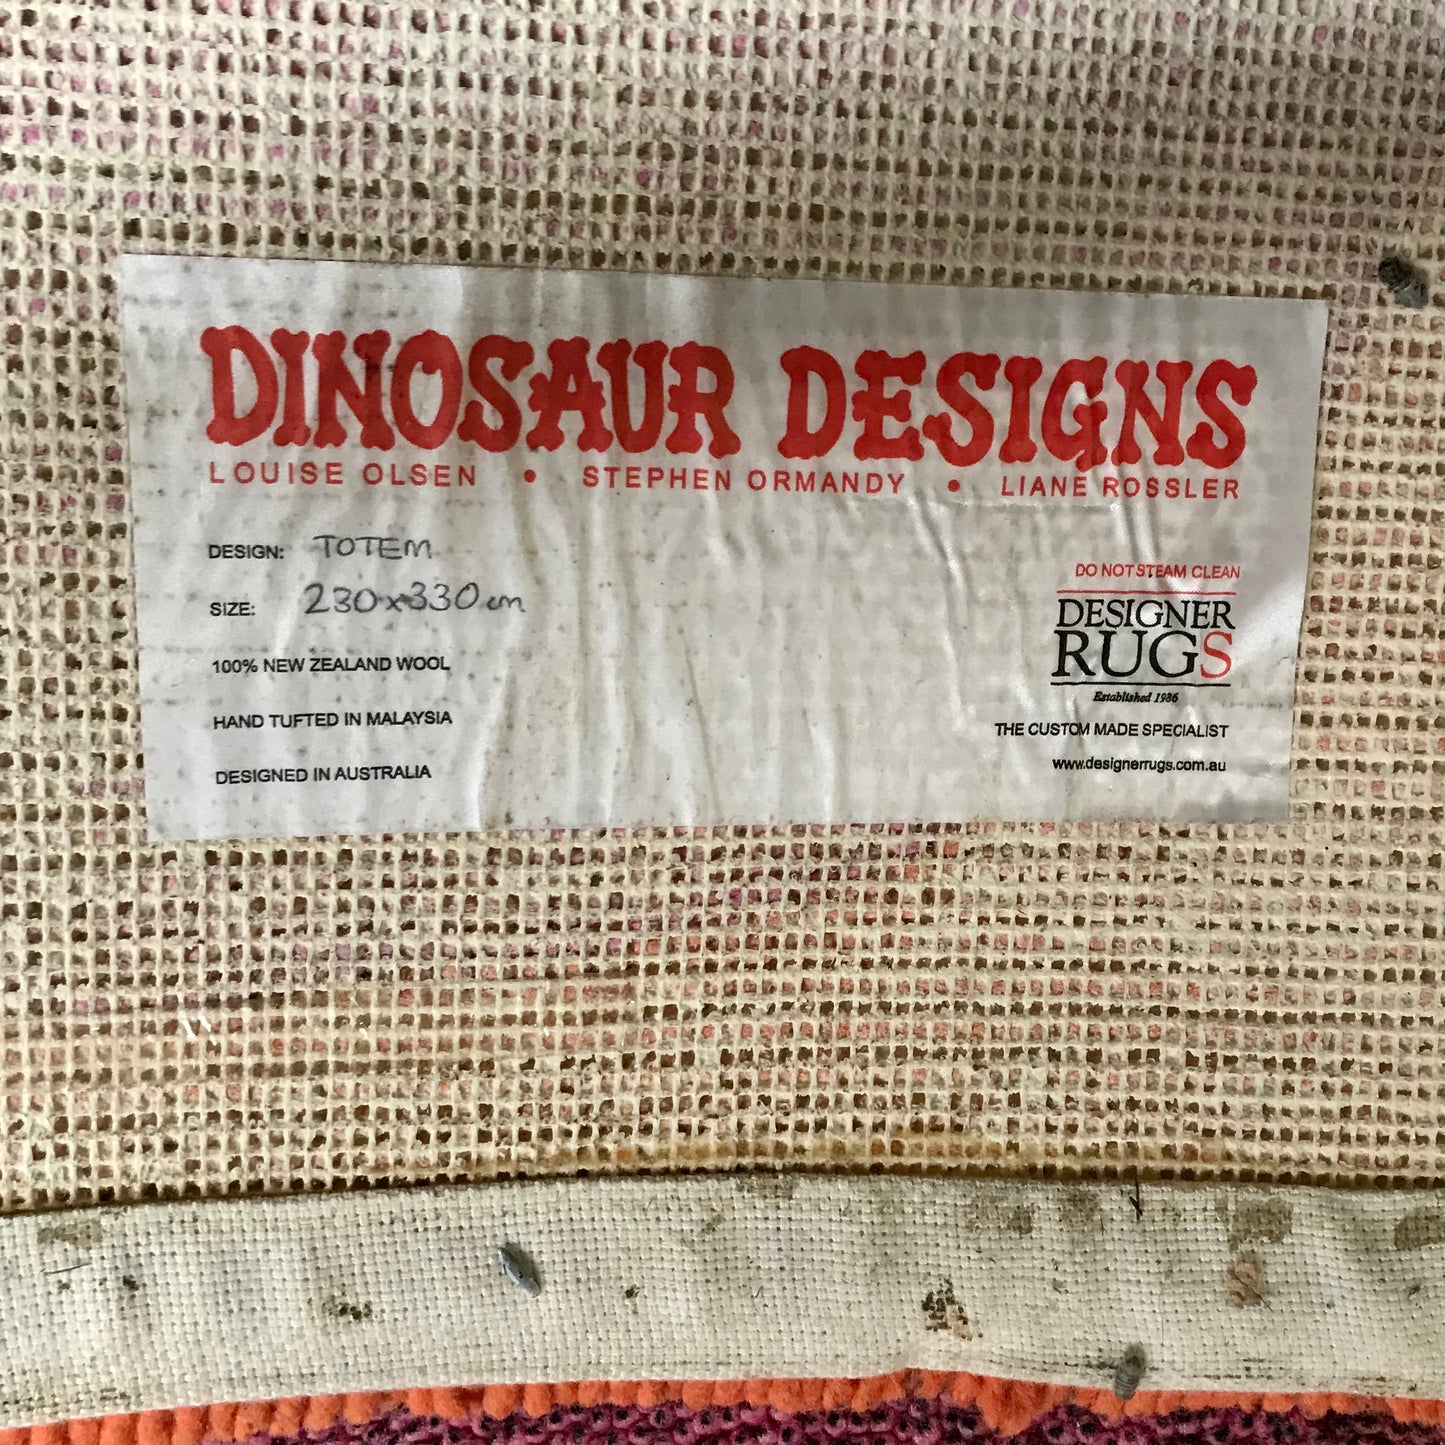 Totem Area Rug by Dinosaur Designs for Designer Rugs